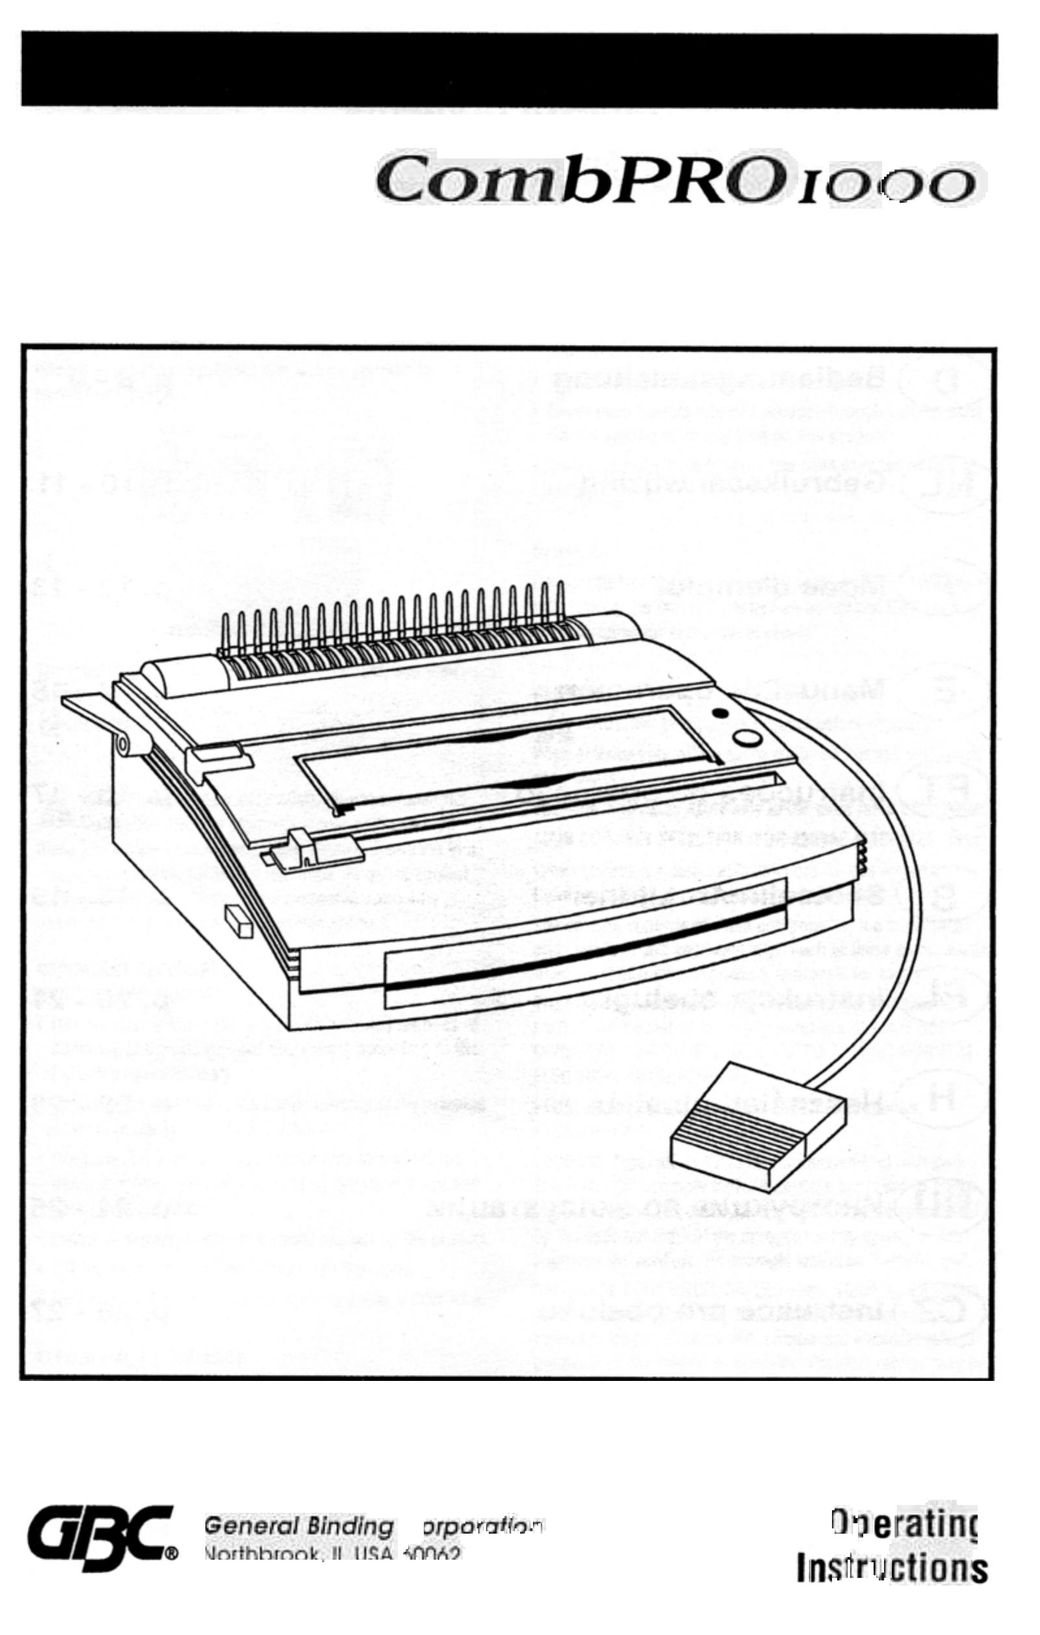 GBC COMBPRO1000 Binding Machine User Manual